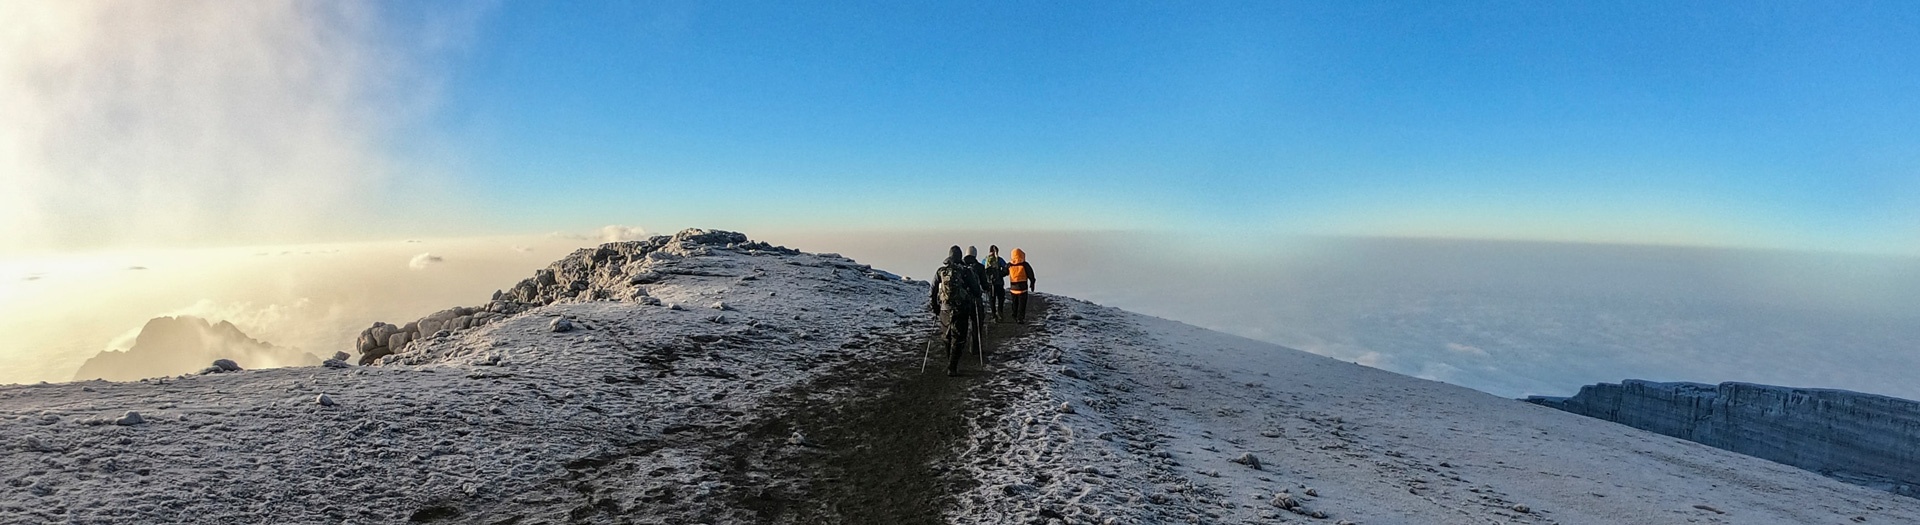 Objectif Kilimandjaro par la voie Lemosho